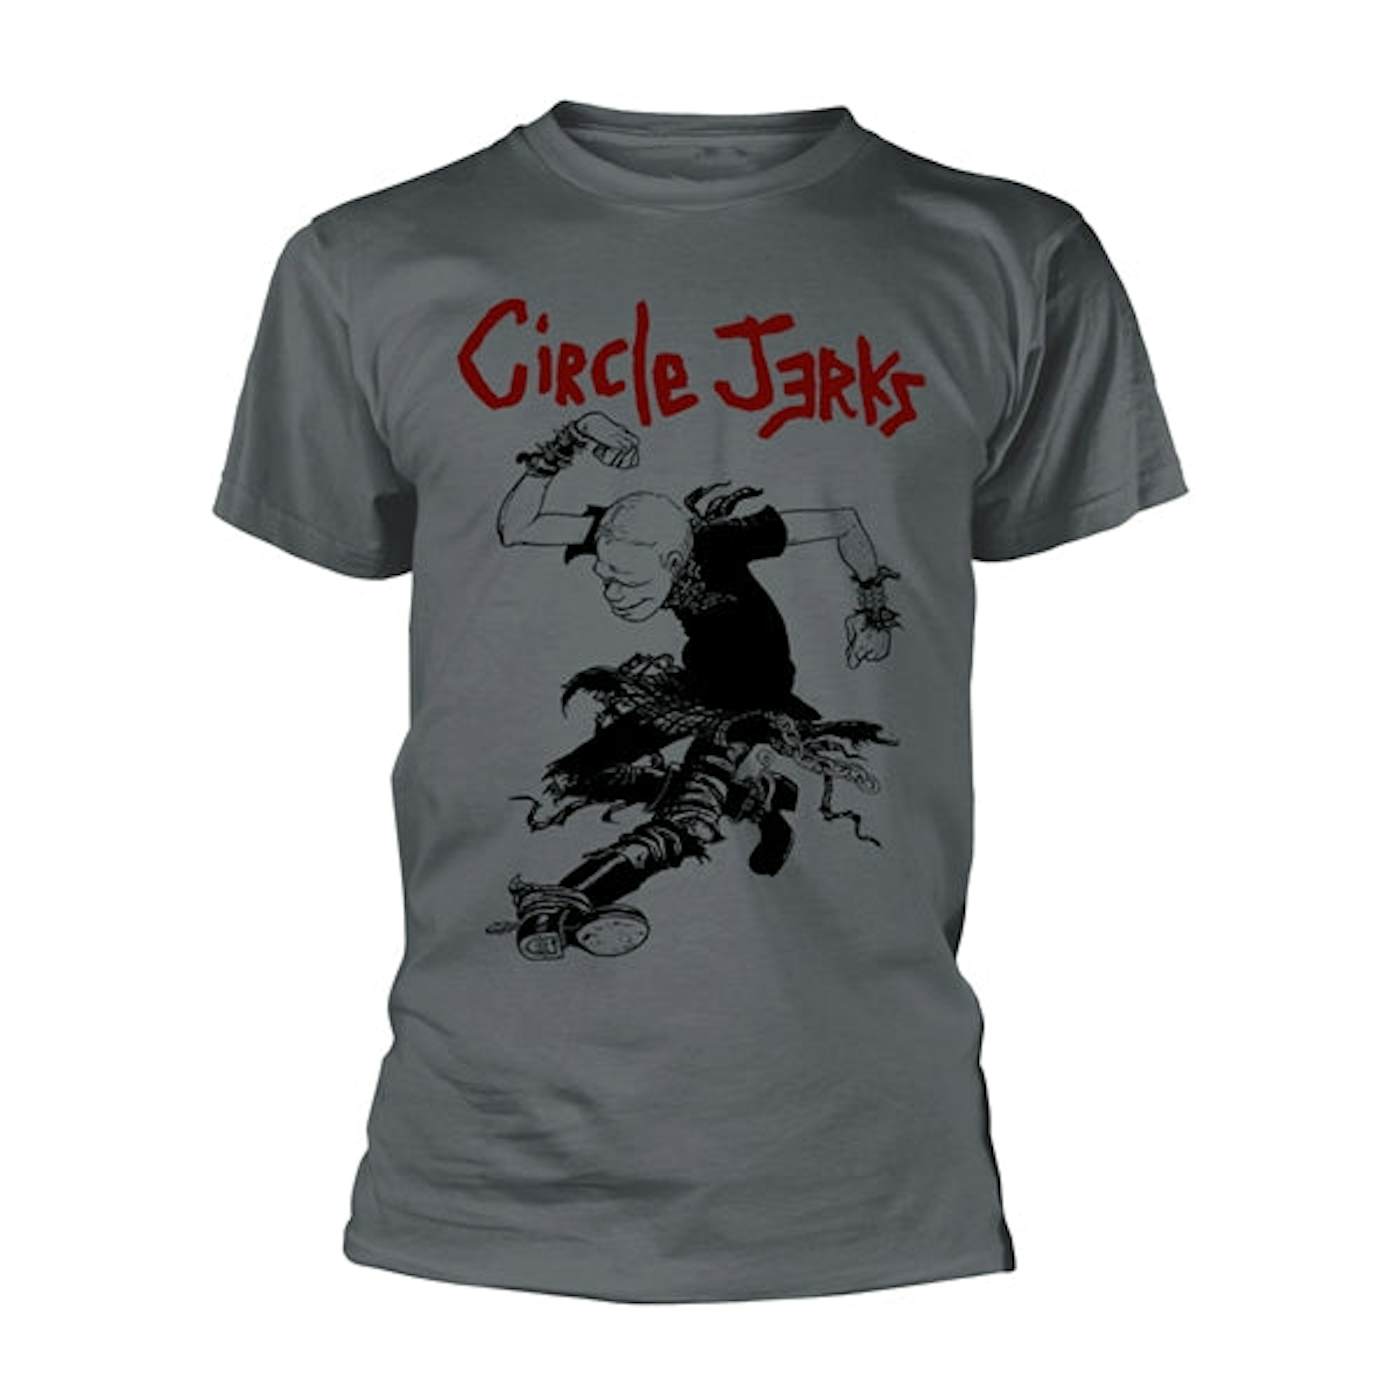 Circle Jerks T Shirt - I'm Gonna Live (Charcoal)